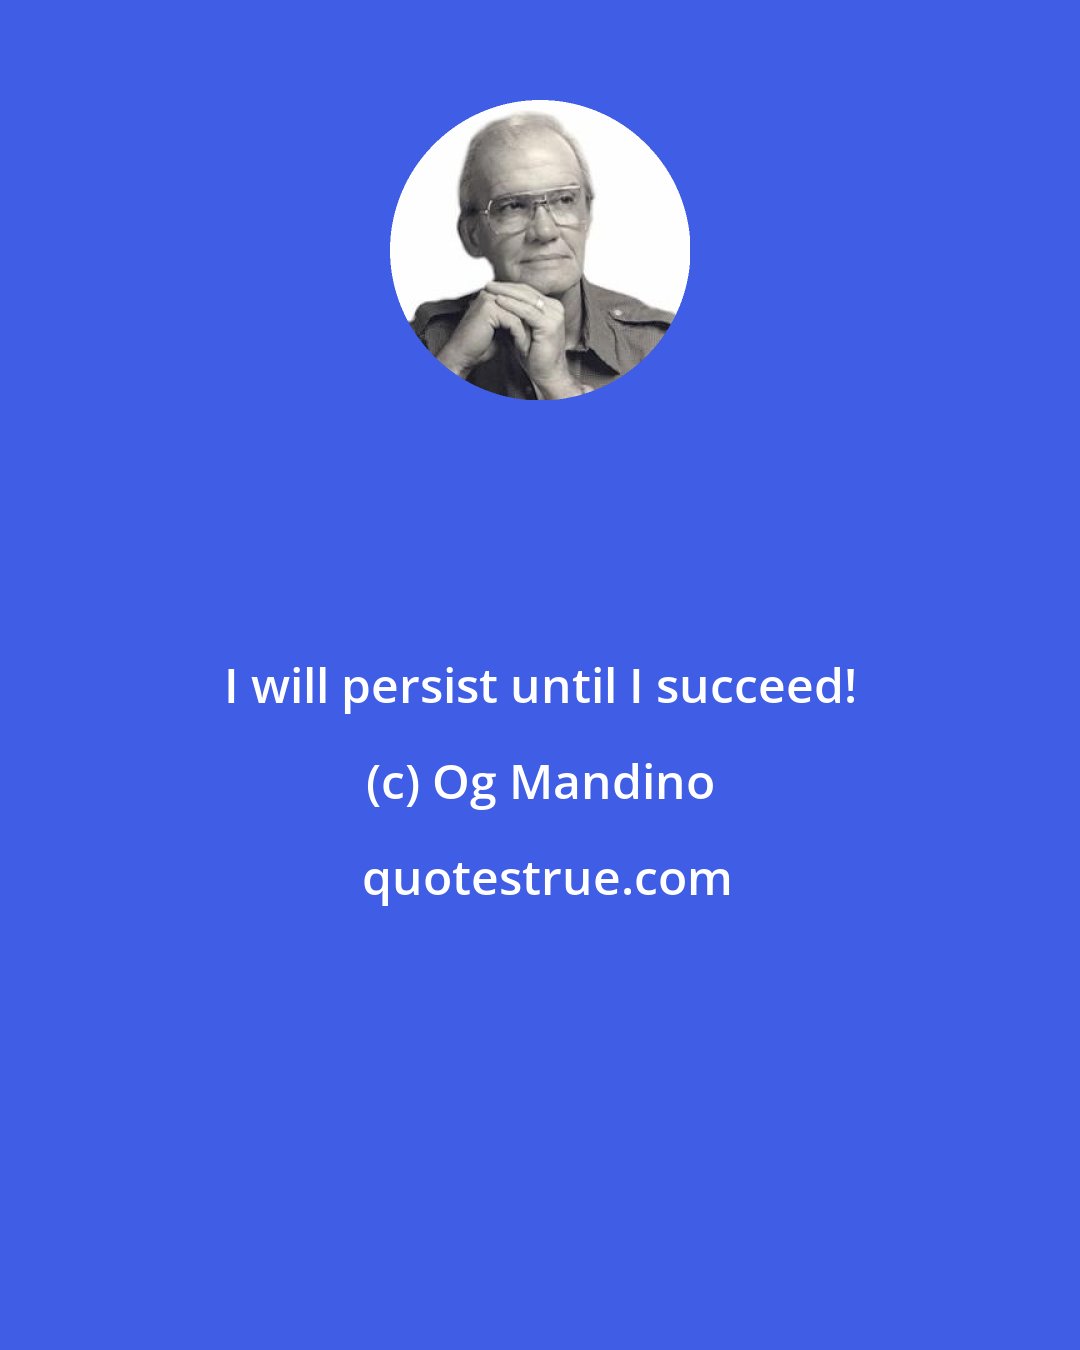 Og Mandino: I will persist until I succeed!